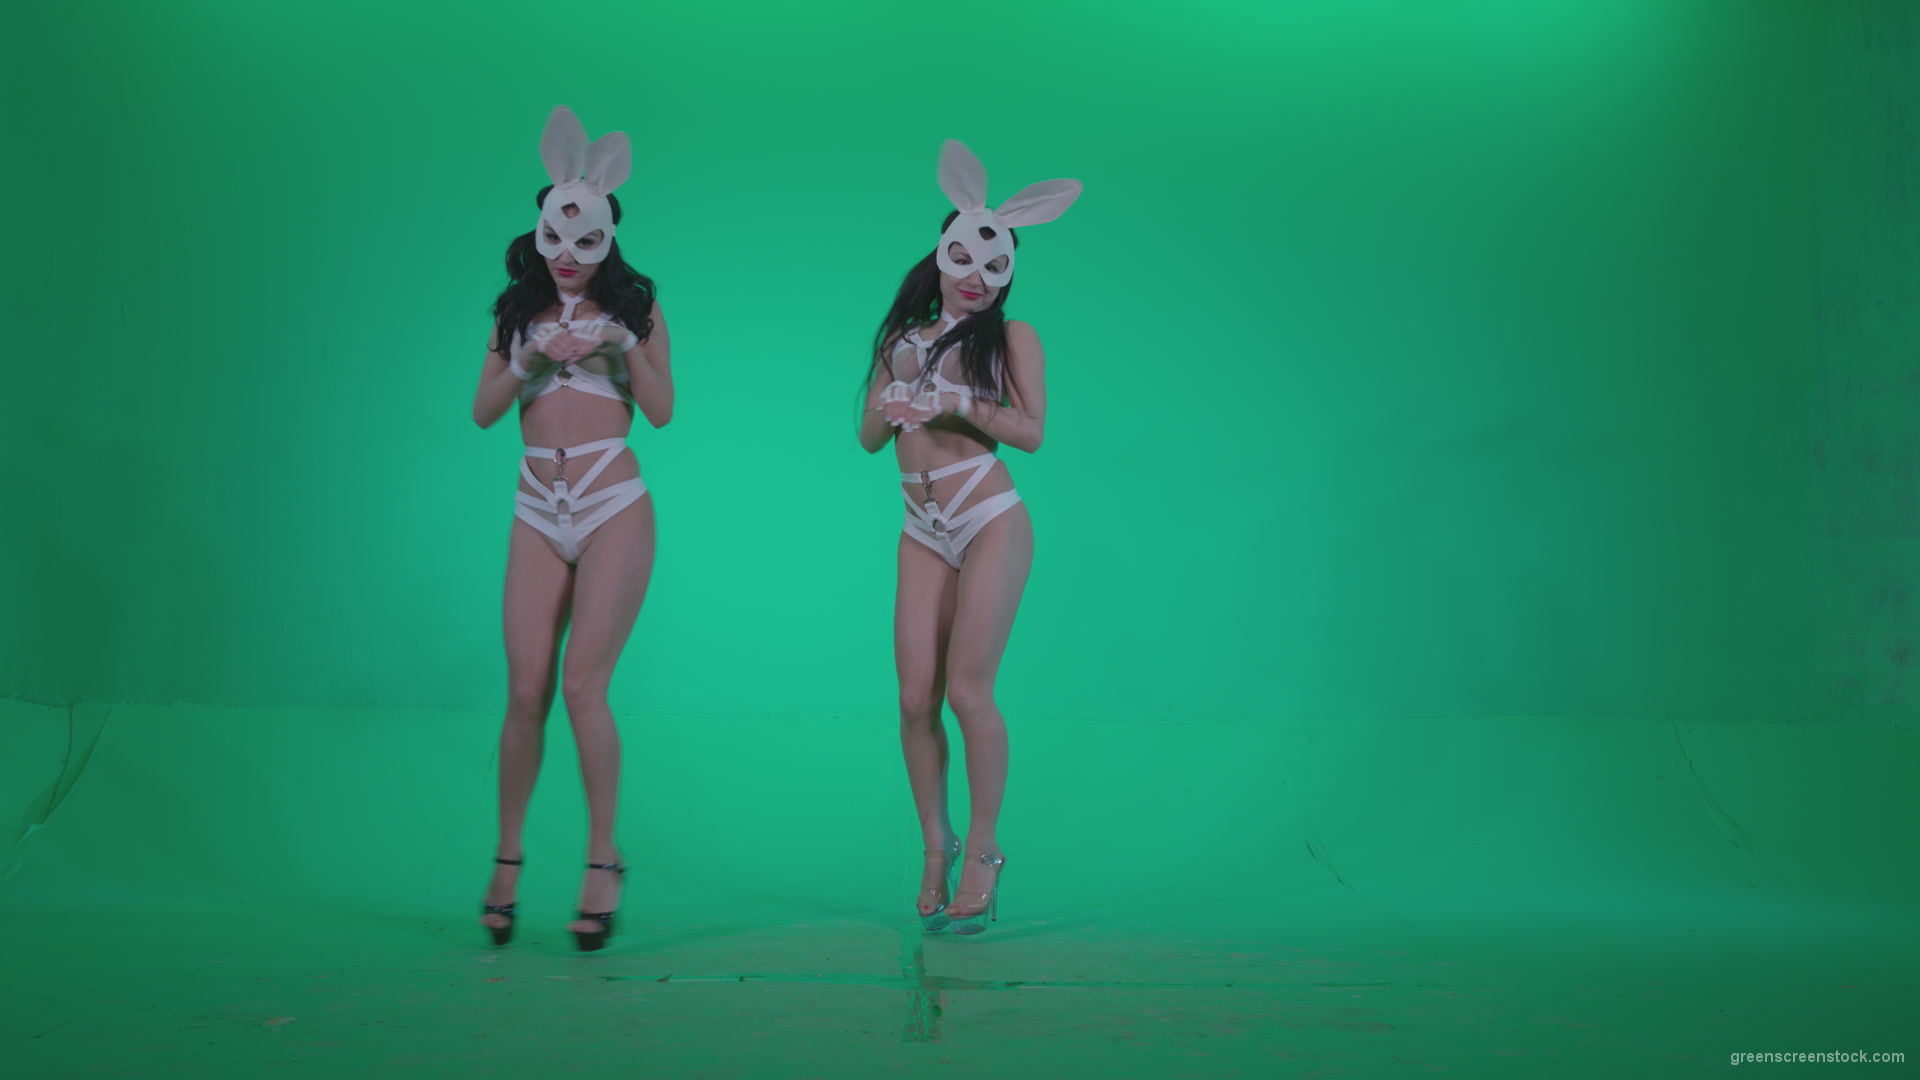 Go-go-Dancer-White-Rabbit-m2-Green-Screen-Video-Footage_007 Green Screen Stock